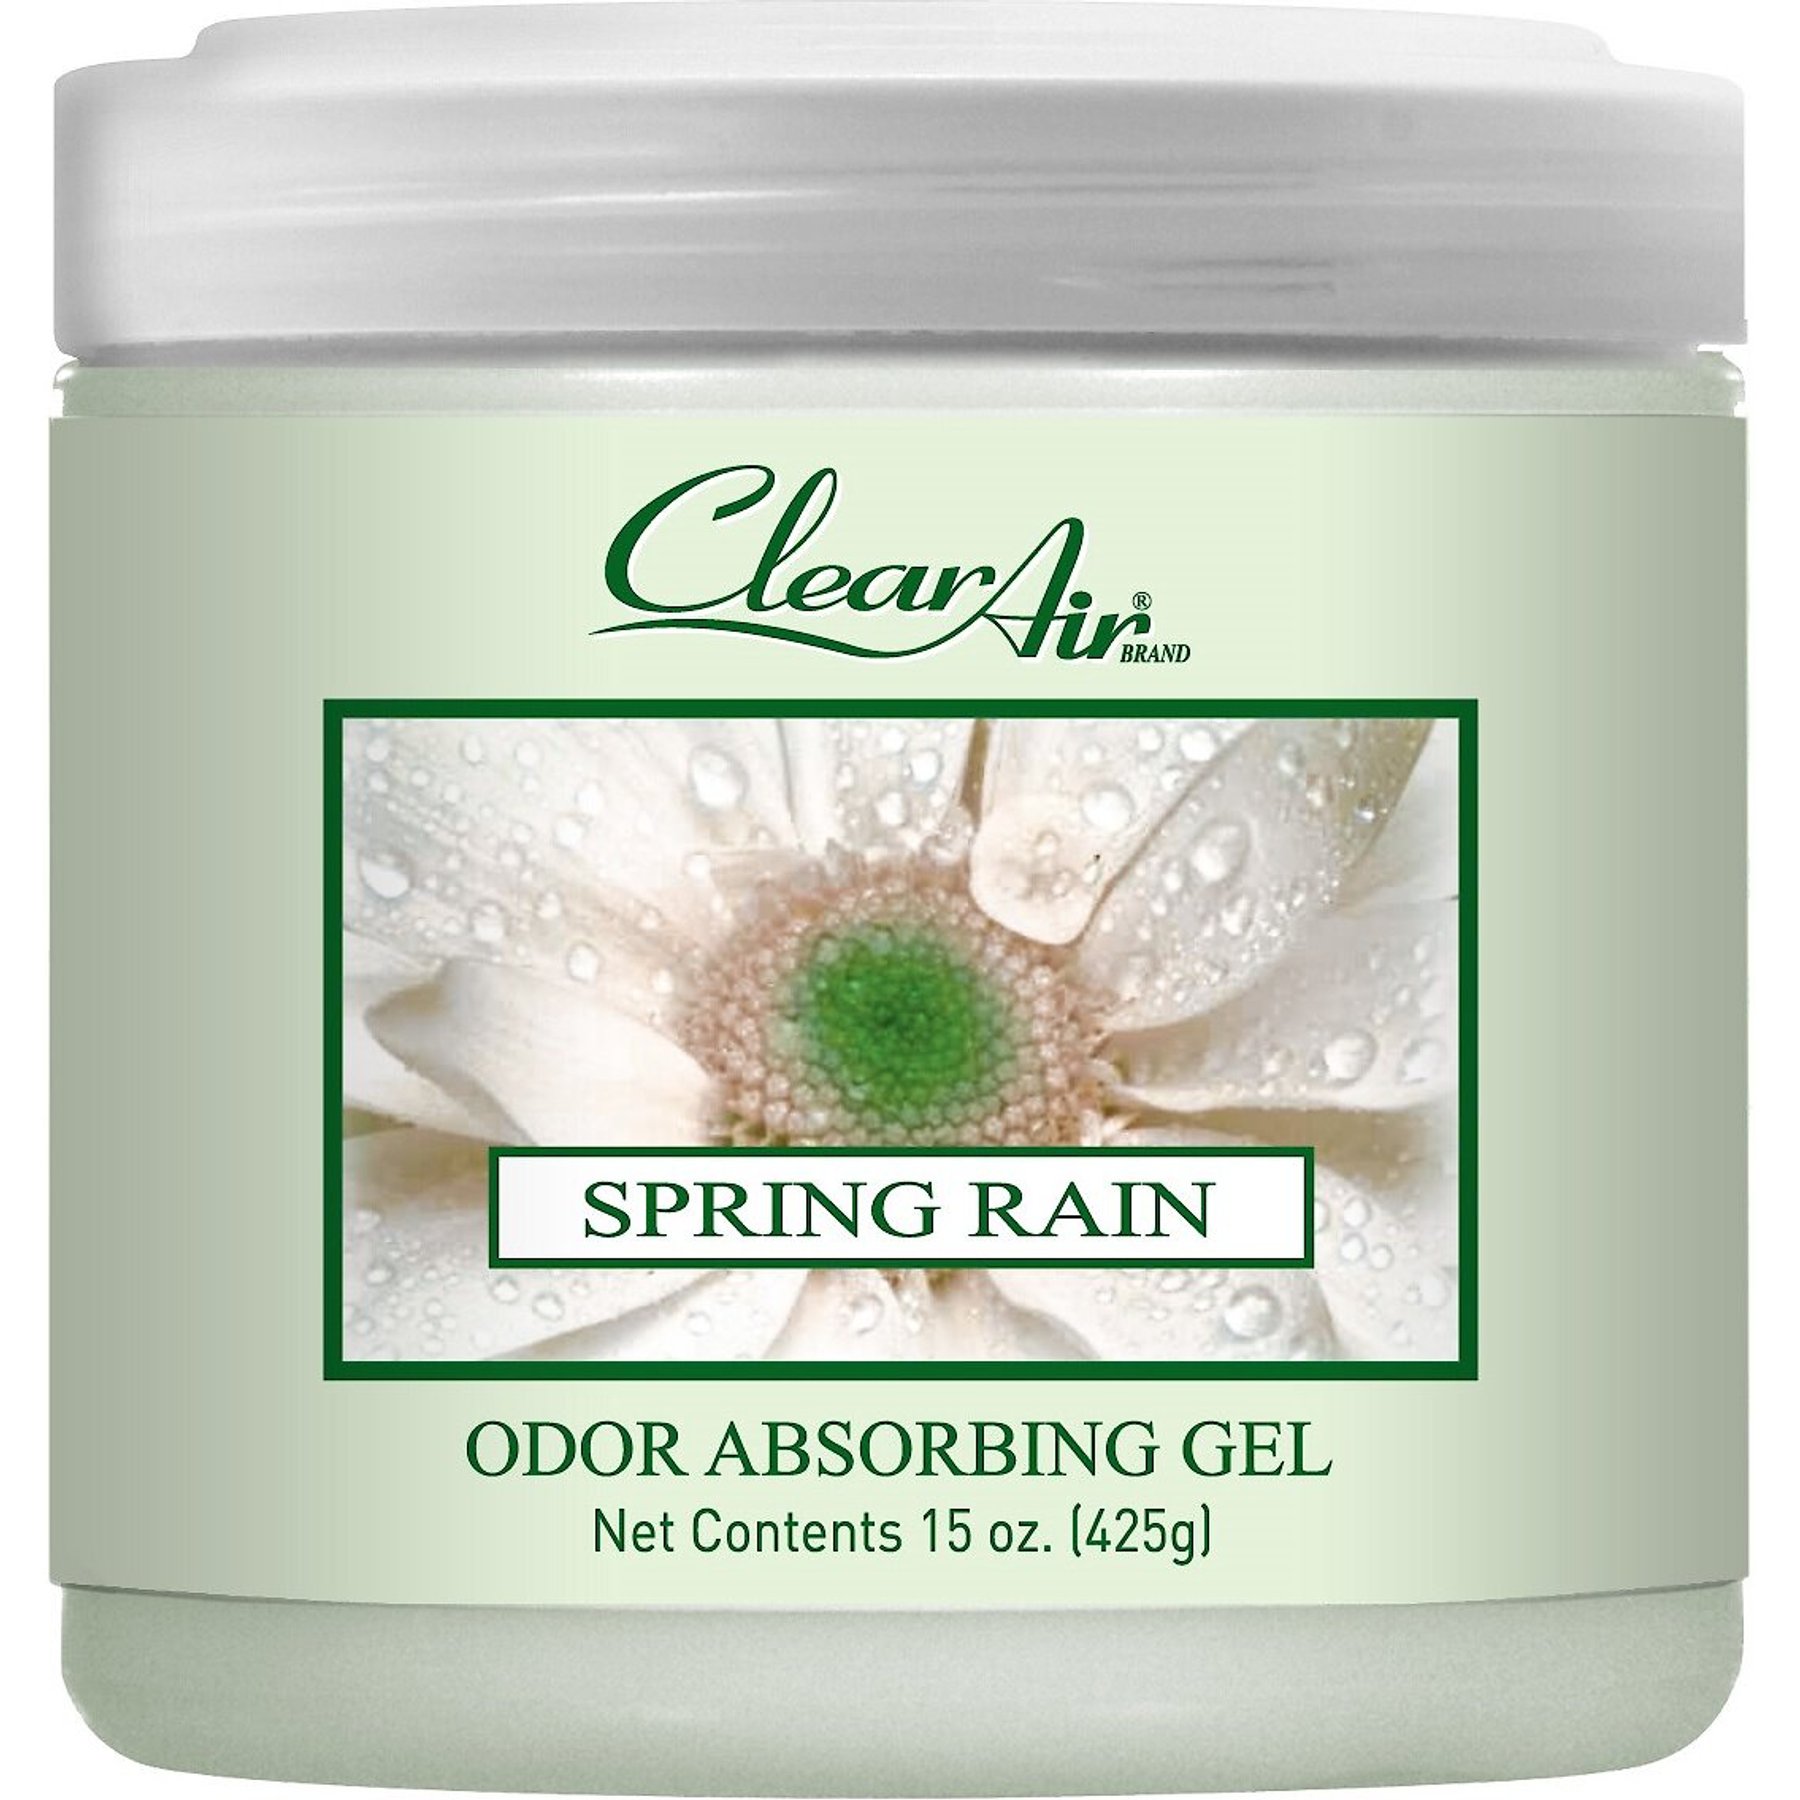 SMELLS BEGONE Calming Rain Pet Odor Absorbing Solid Gel, 15-oz jar 